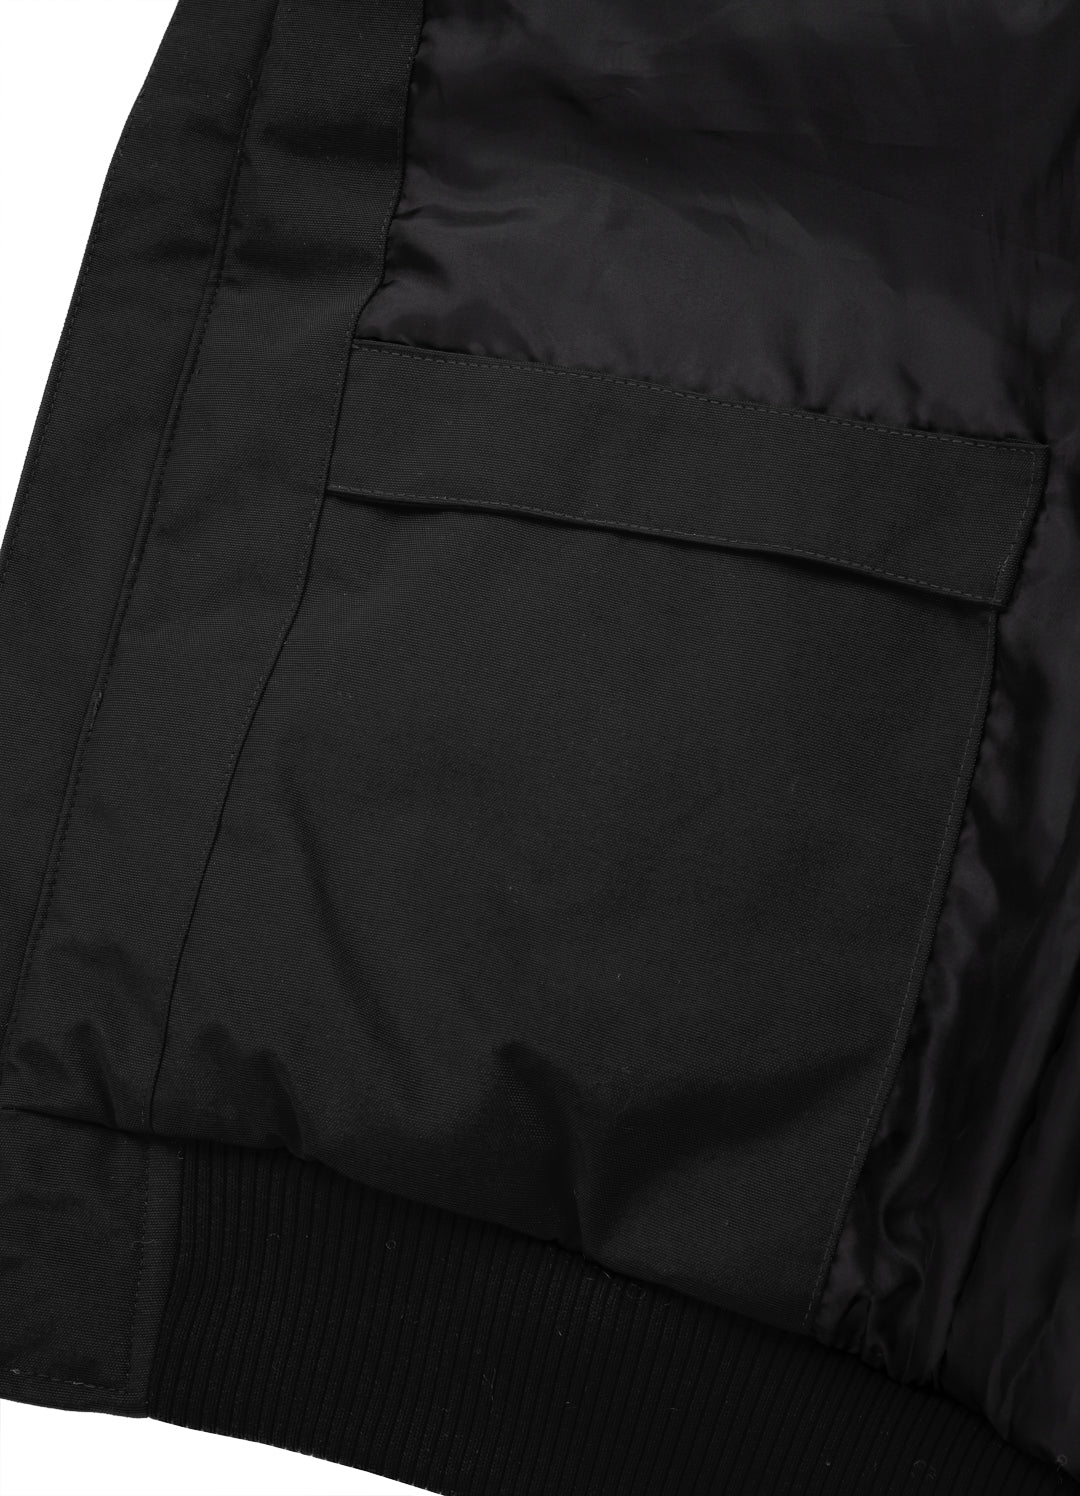 Buy BALBOA II Black Jacket | Pitbull Store